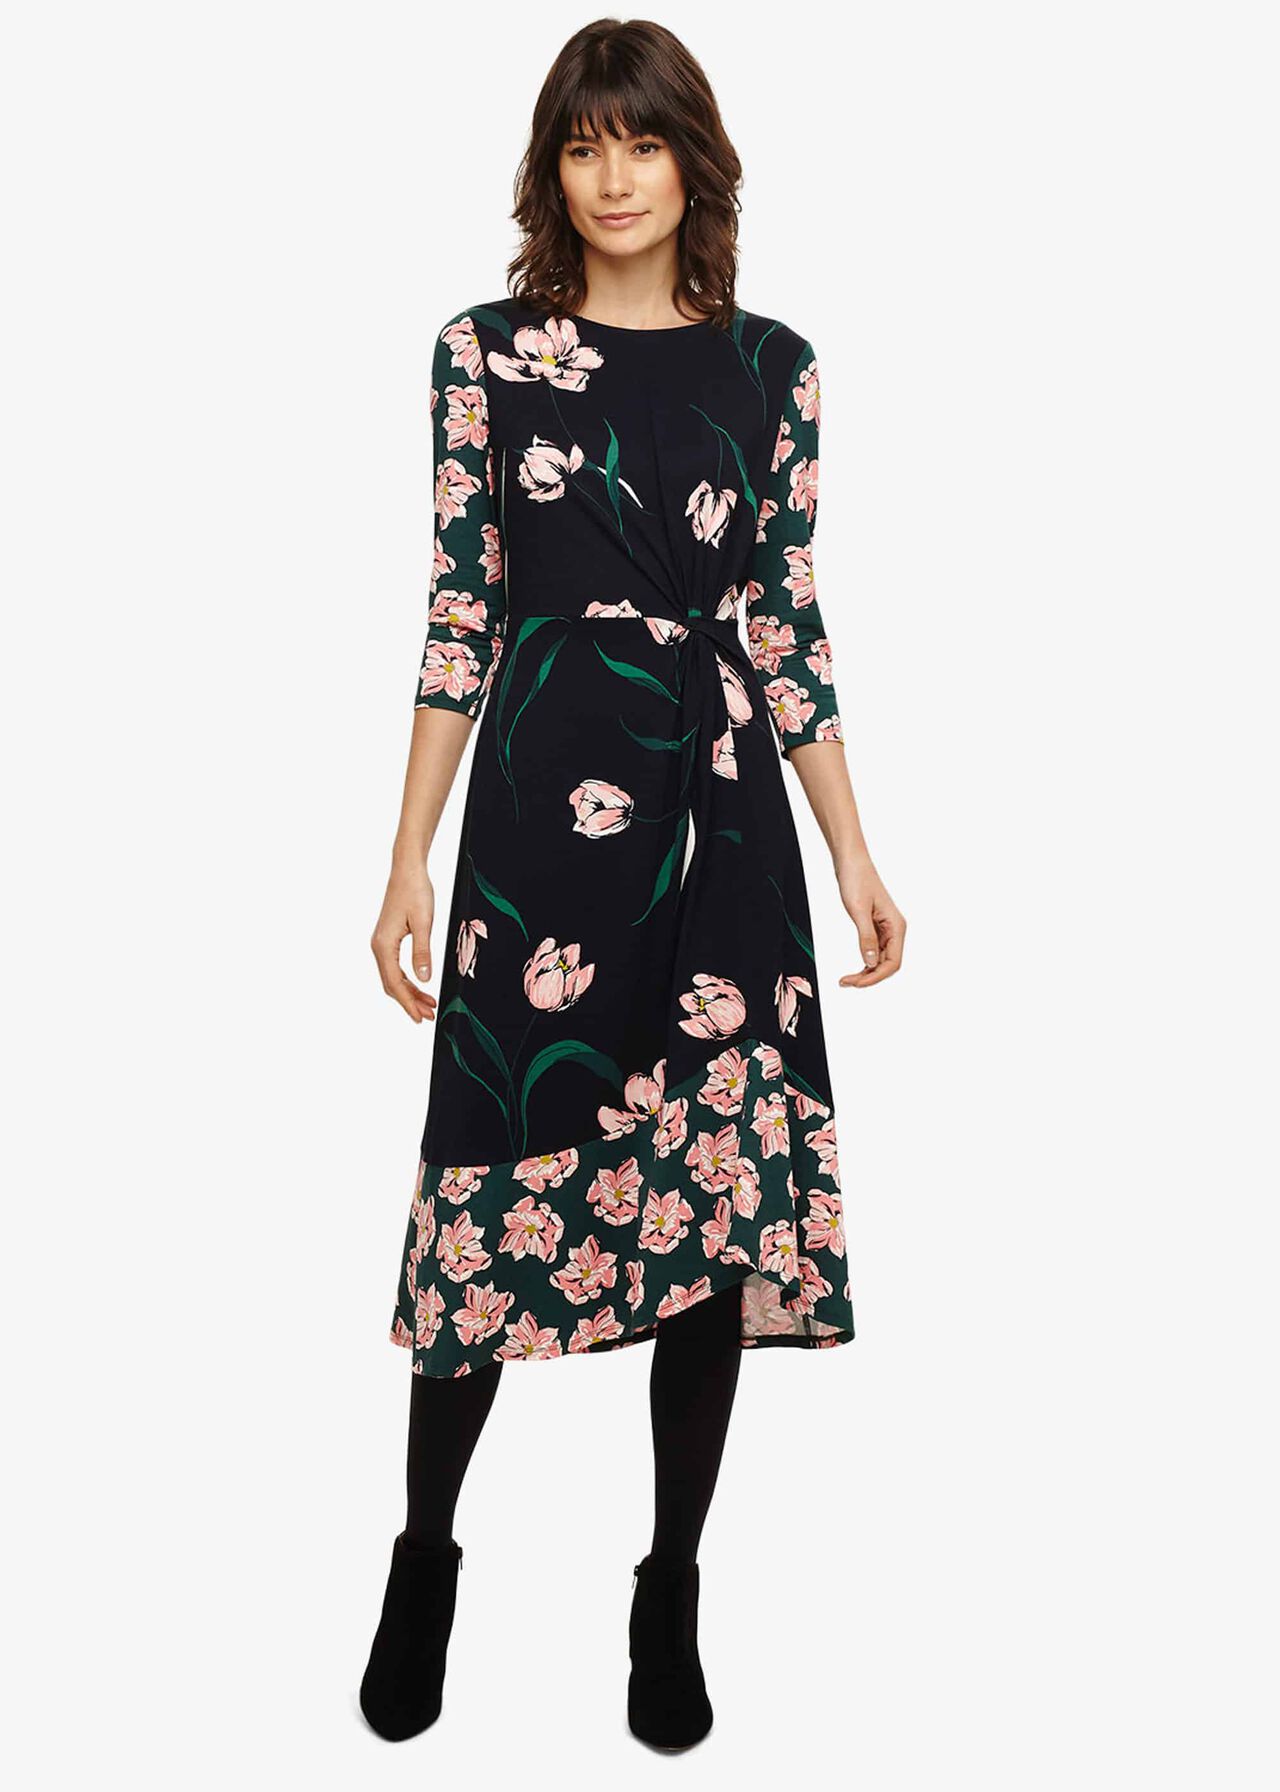 Leto Floral Print Dress